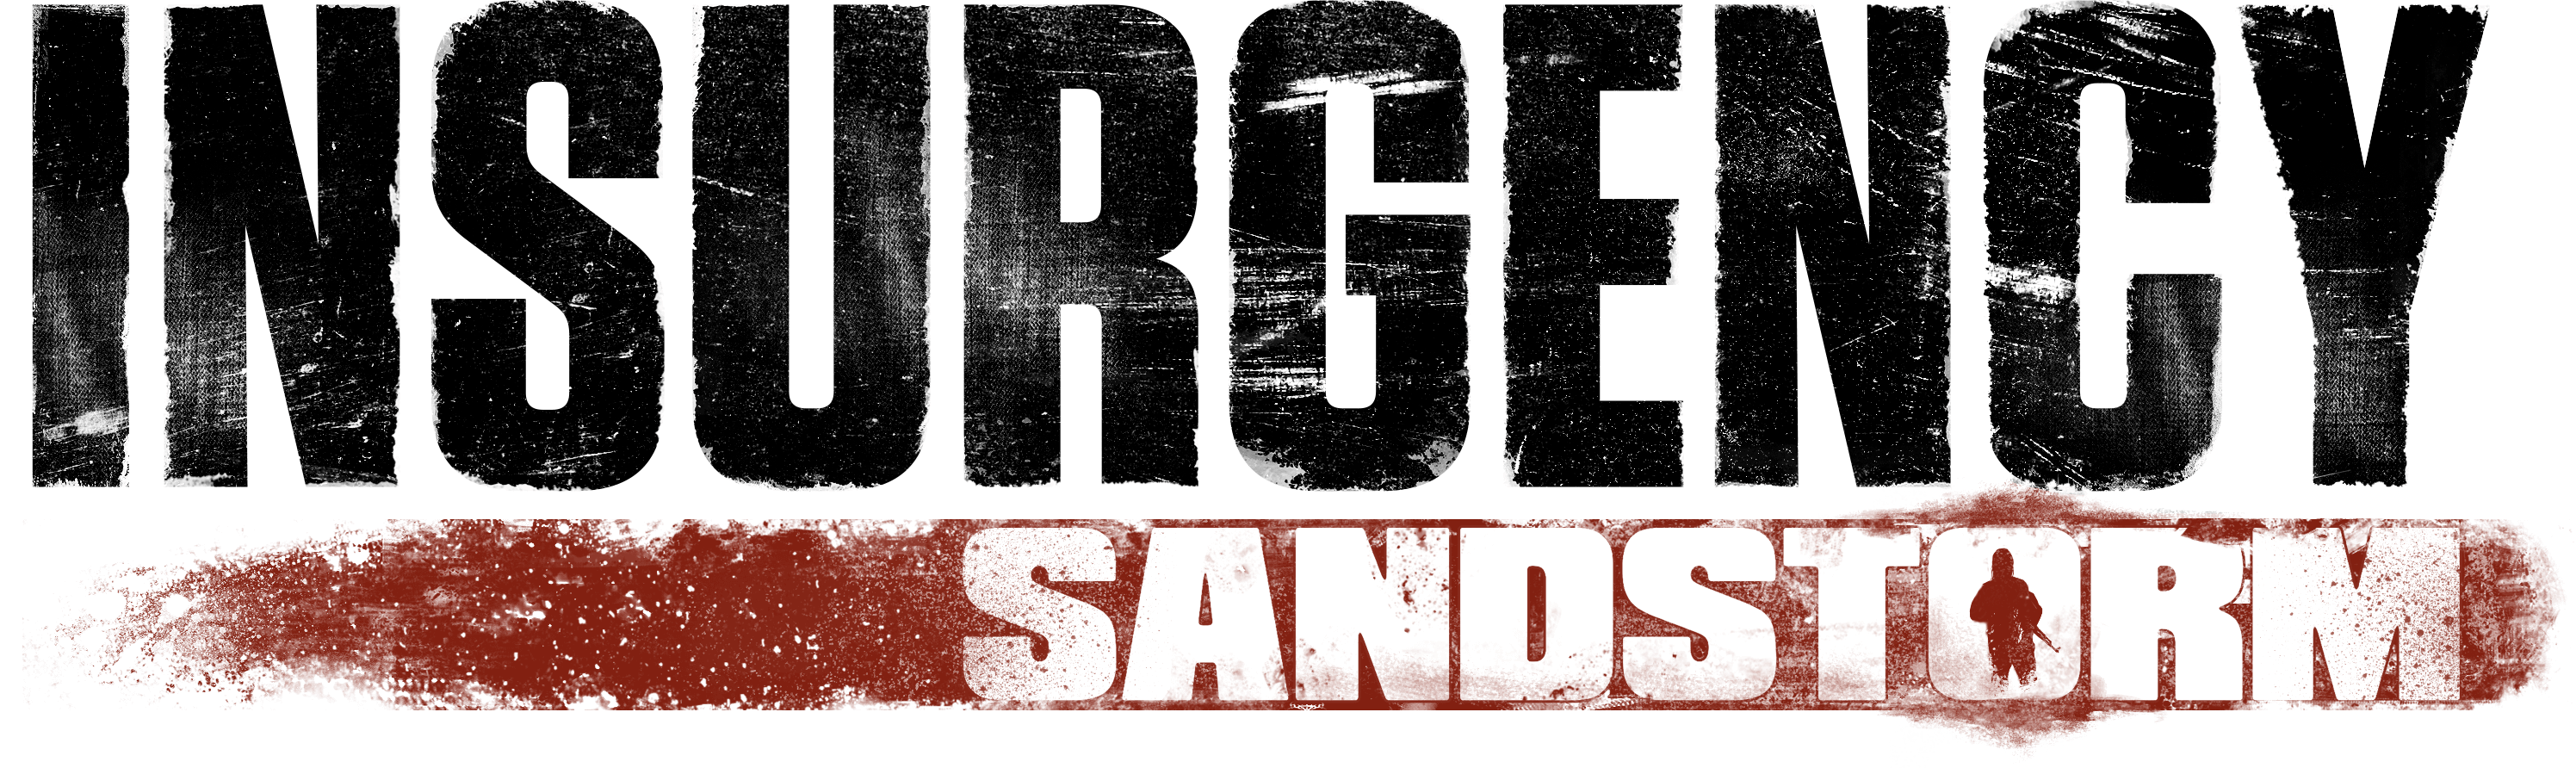 Insurgency: Sandstorm